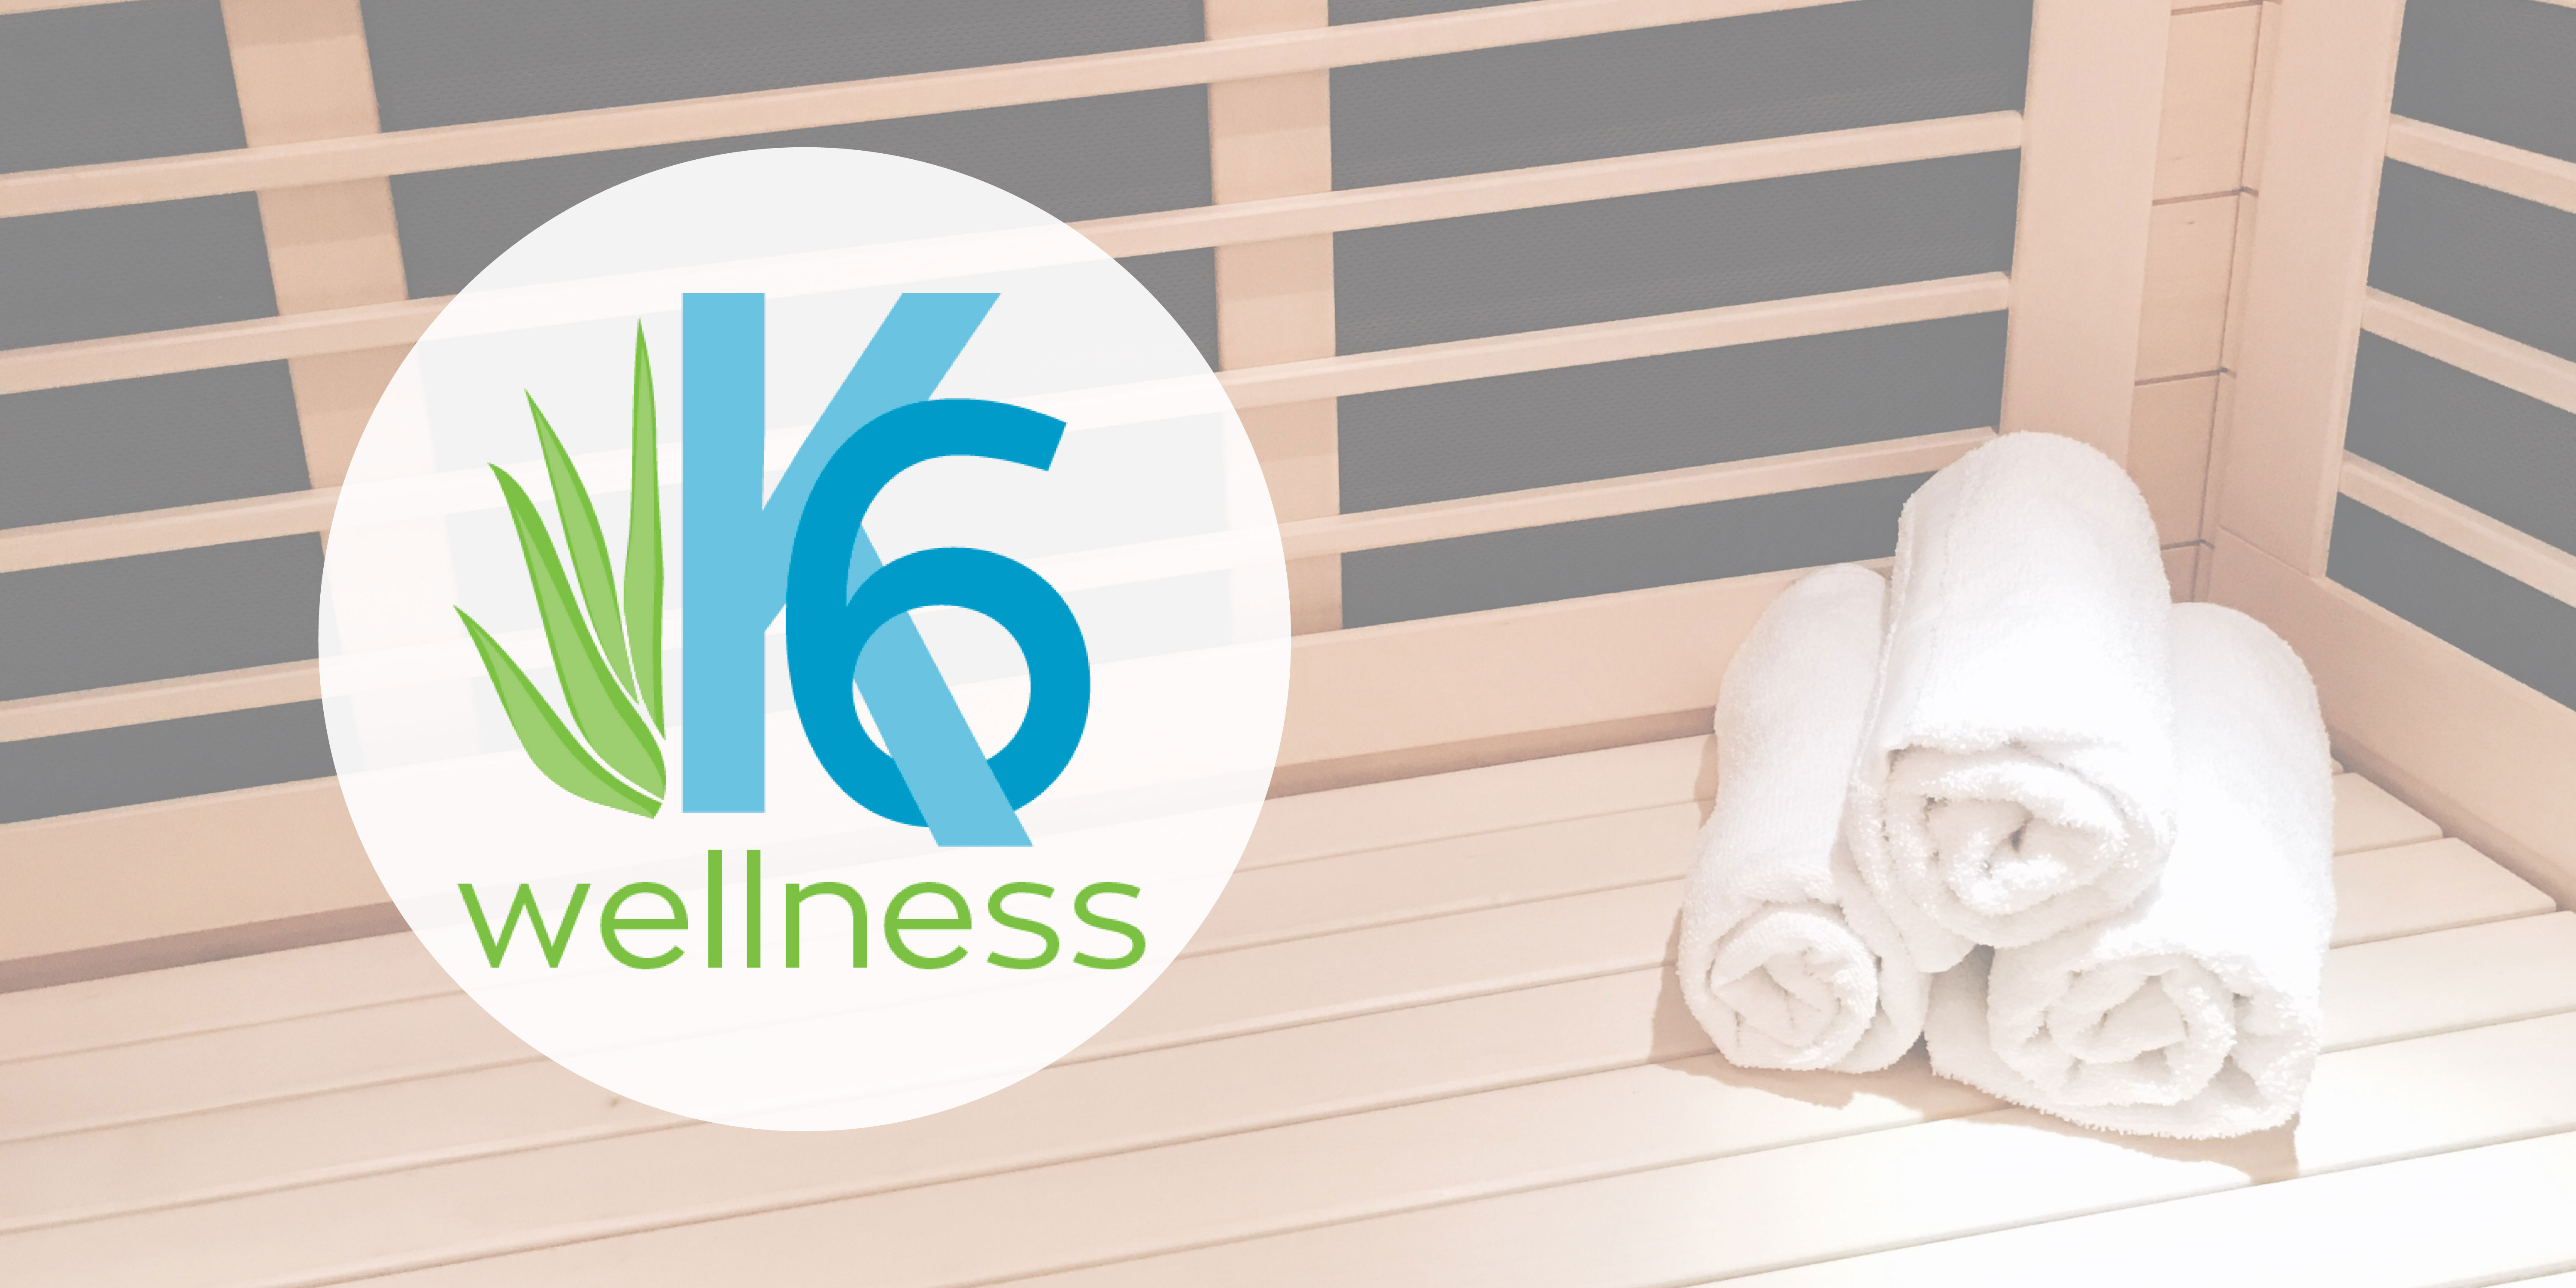 Far infrared Sauna, sauna, k6 wellness, wellness center